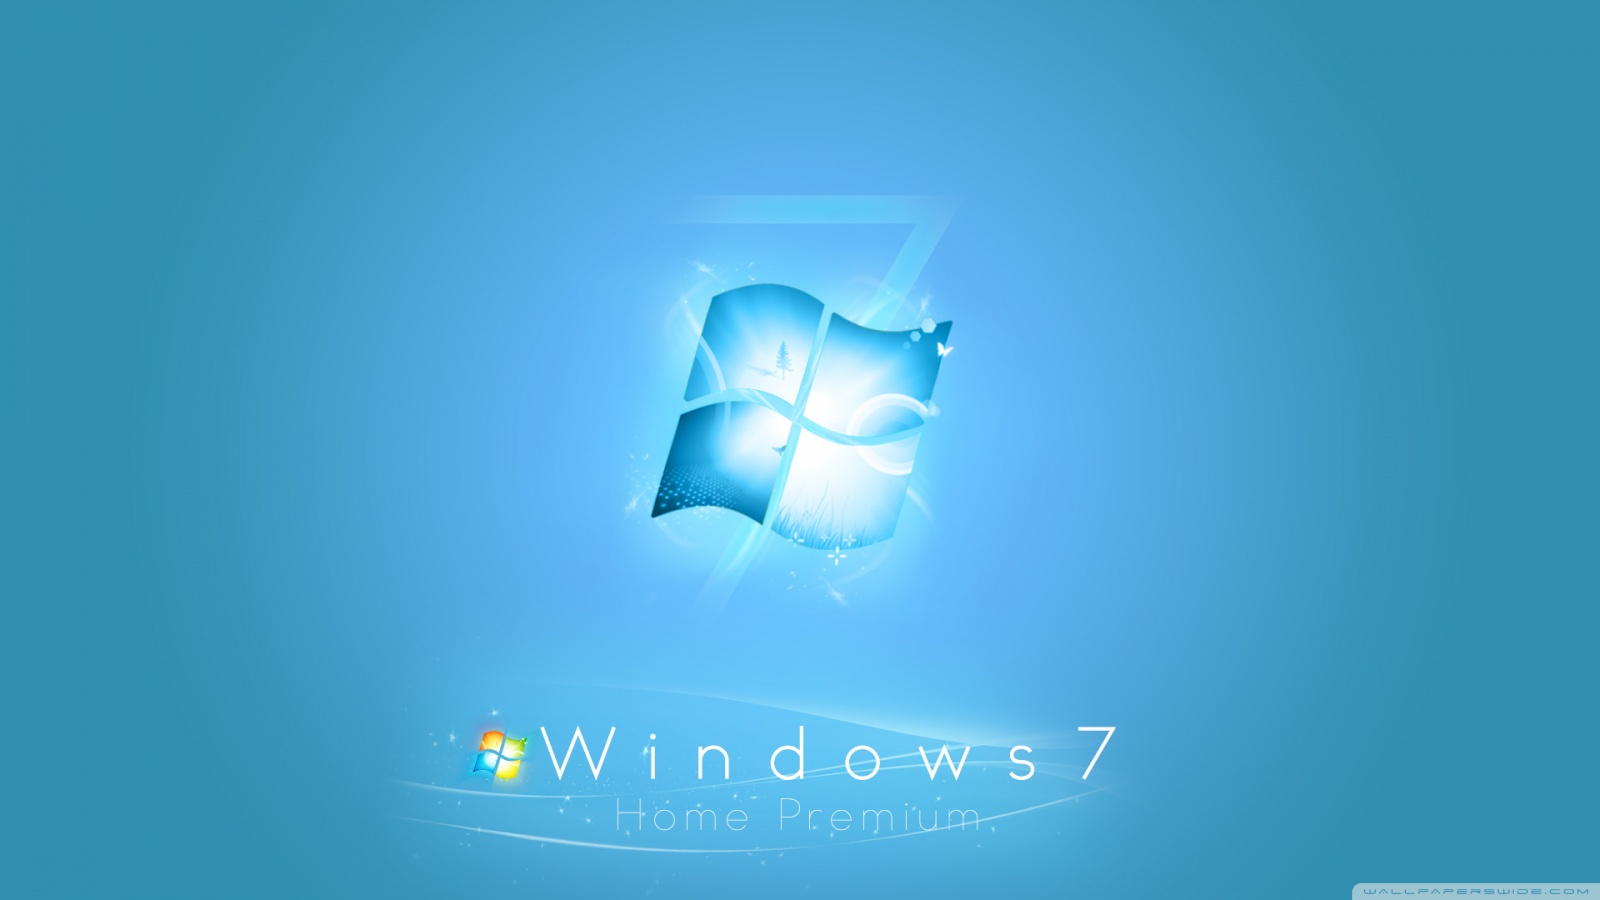 windows 7 wallpaper hd for desktop